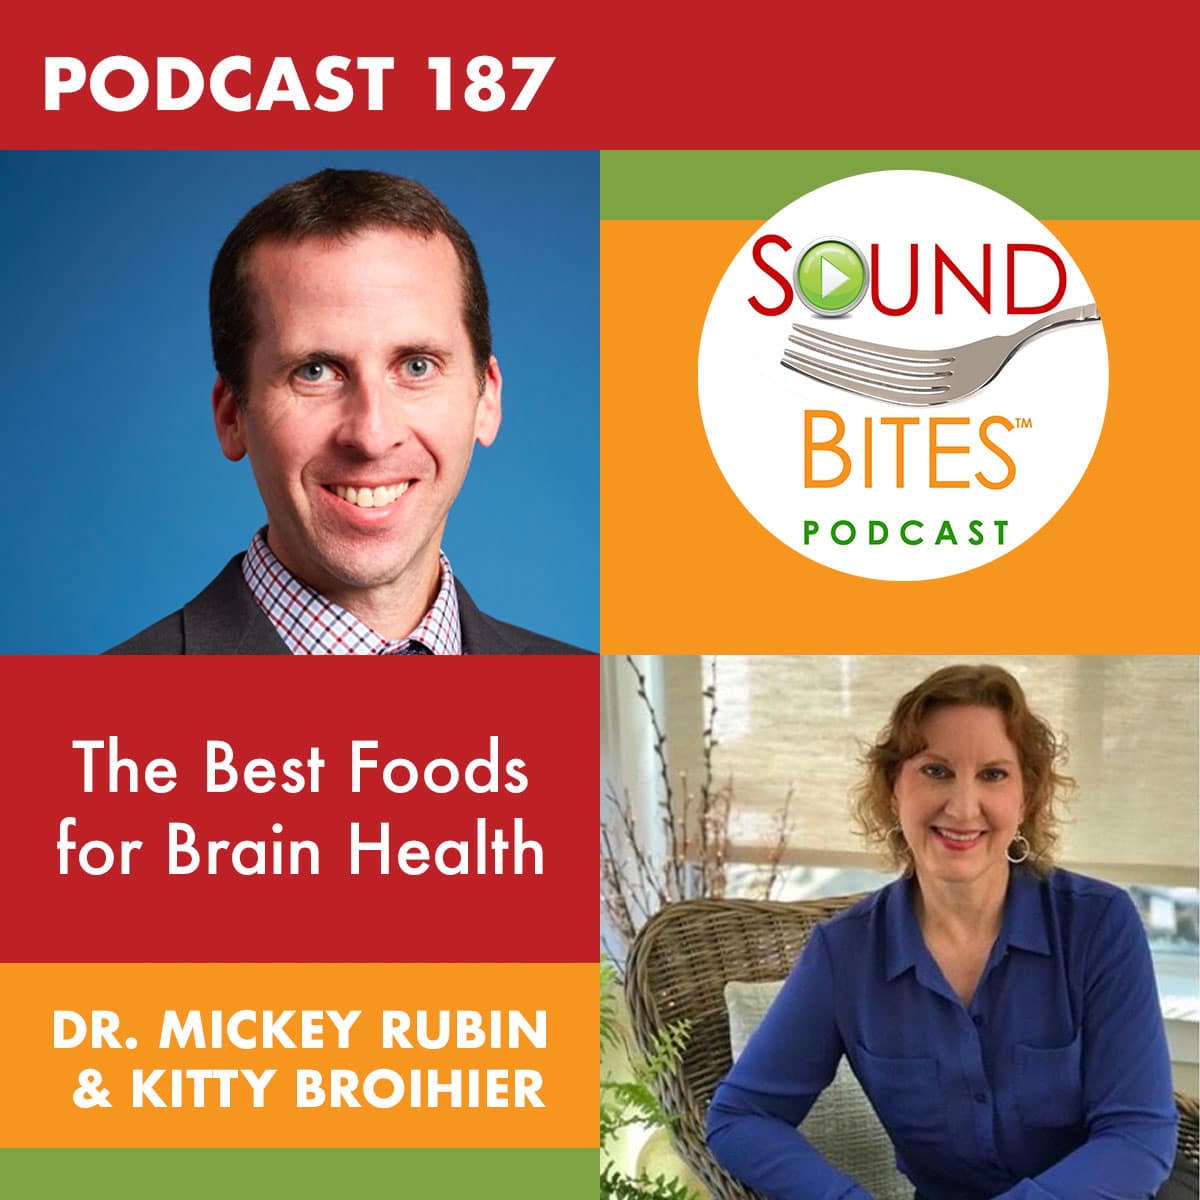 Podcast Episode 223: POTS: Postural Orthostatic Tachycardia Syndrome –  Cheryl Harris - Sound Bites RD